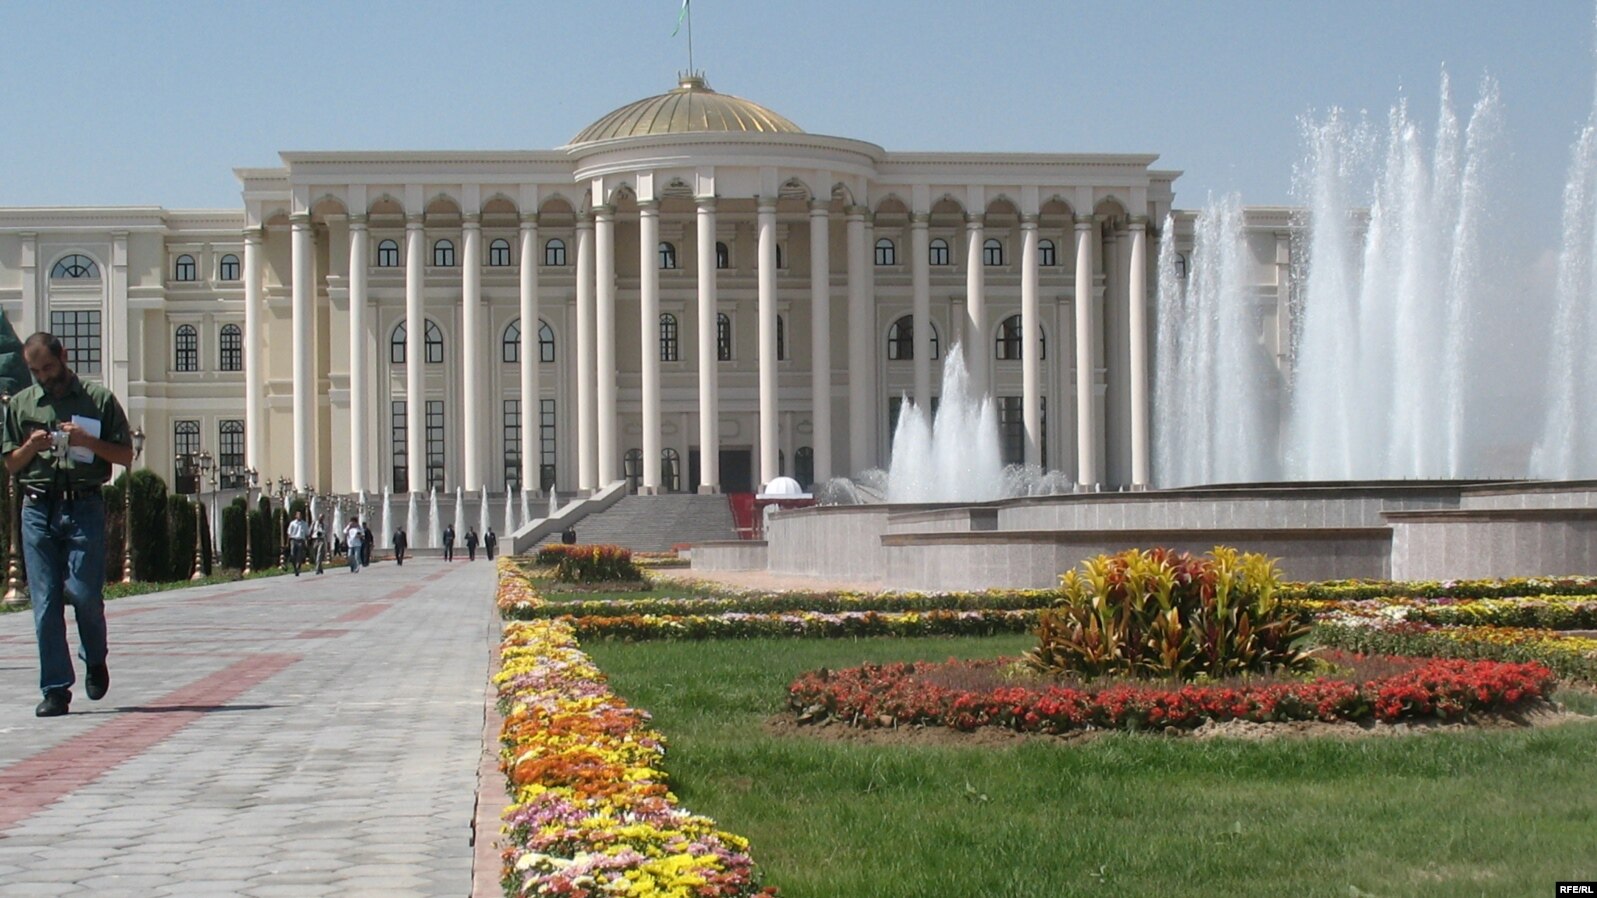 Нижний душанбе. Президентский дворец Таджикистана. Касри миллат Таджикистан. Дворец нации (Душанбе). Дворец нации Кохи миллат.